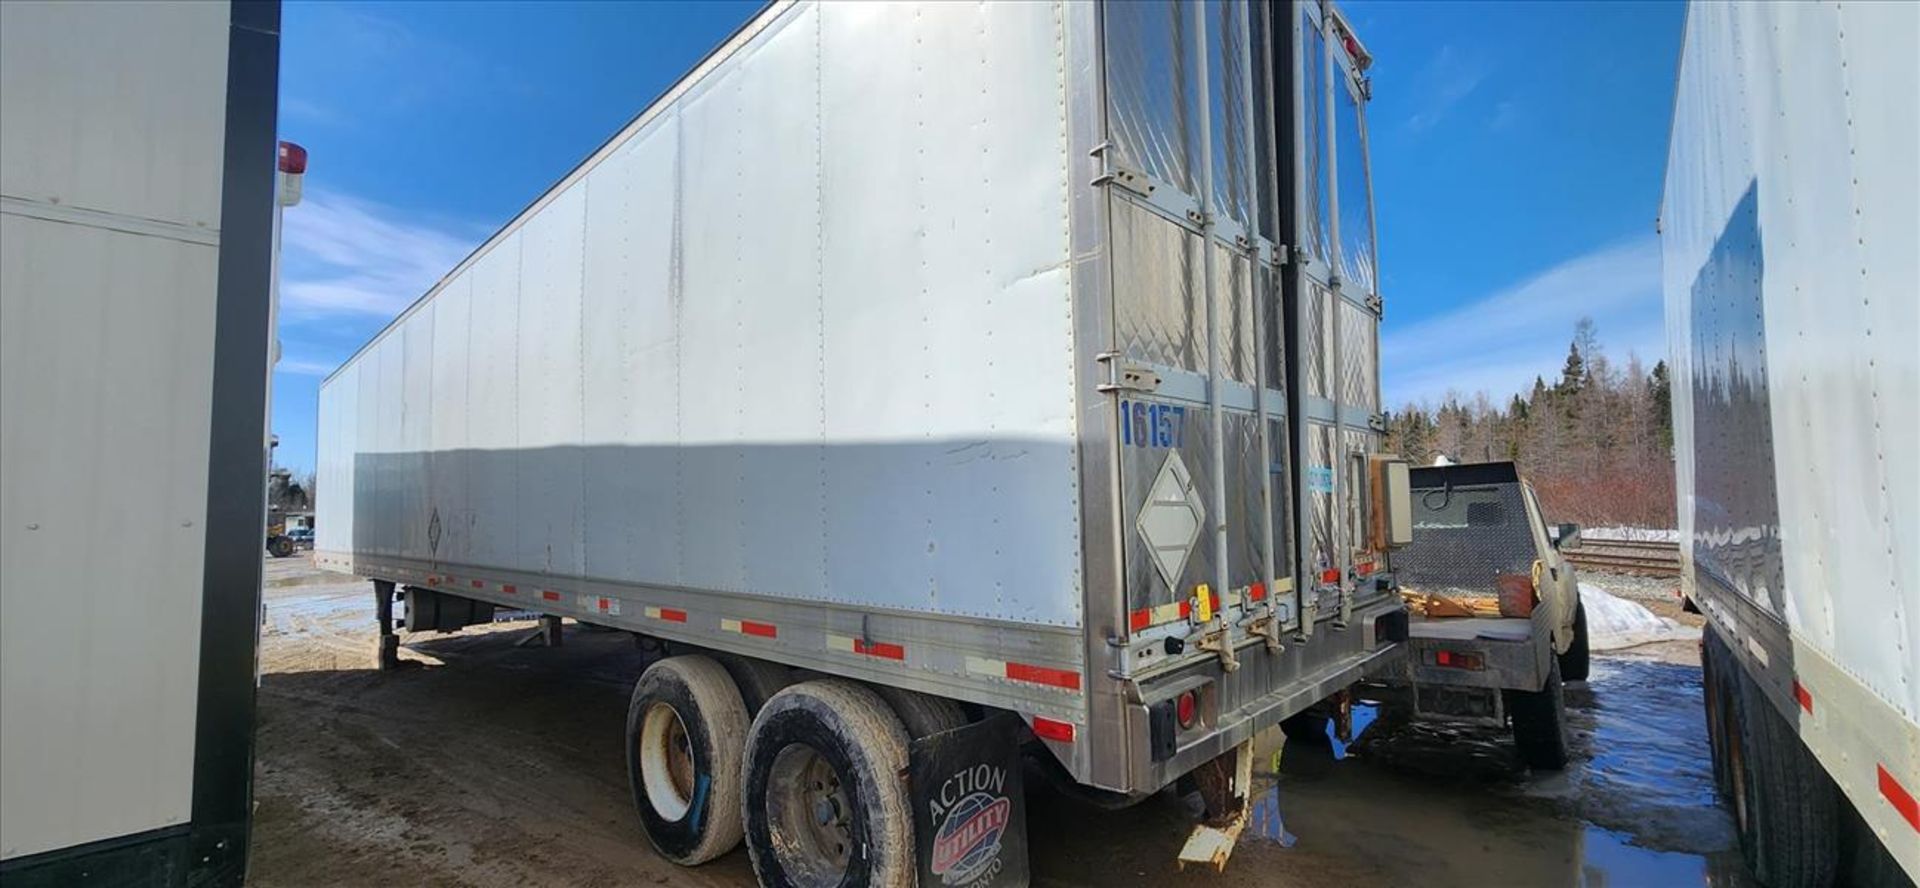 Utility hwy trailer, mod. 2000RX, VIN 1UYVS2481RM084607, 53 ft., T/A, aluminum deck, barn-doors (